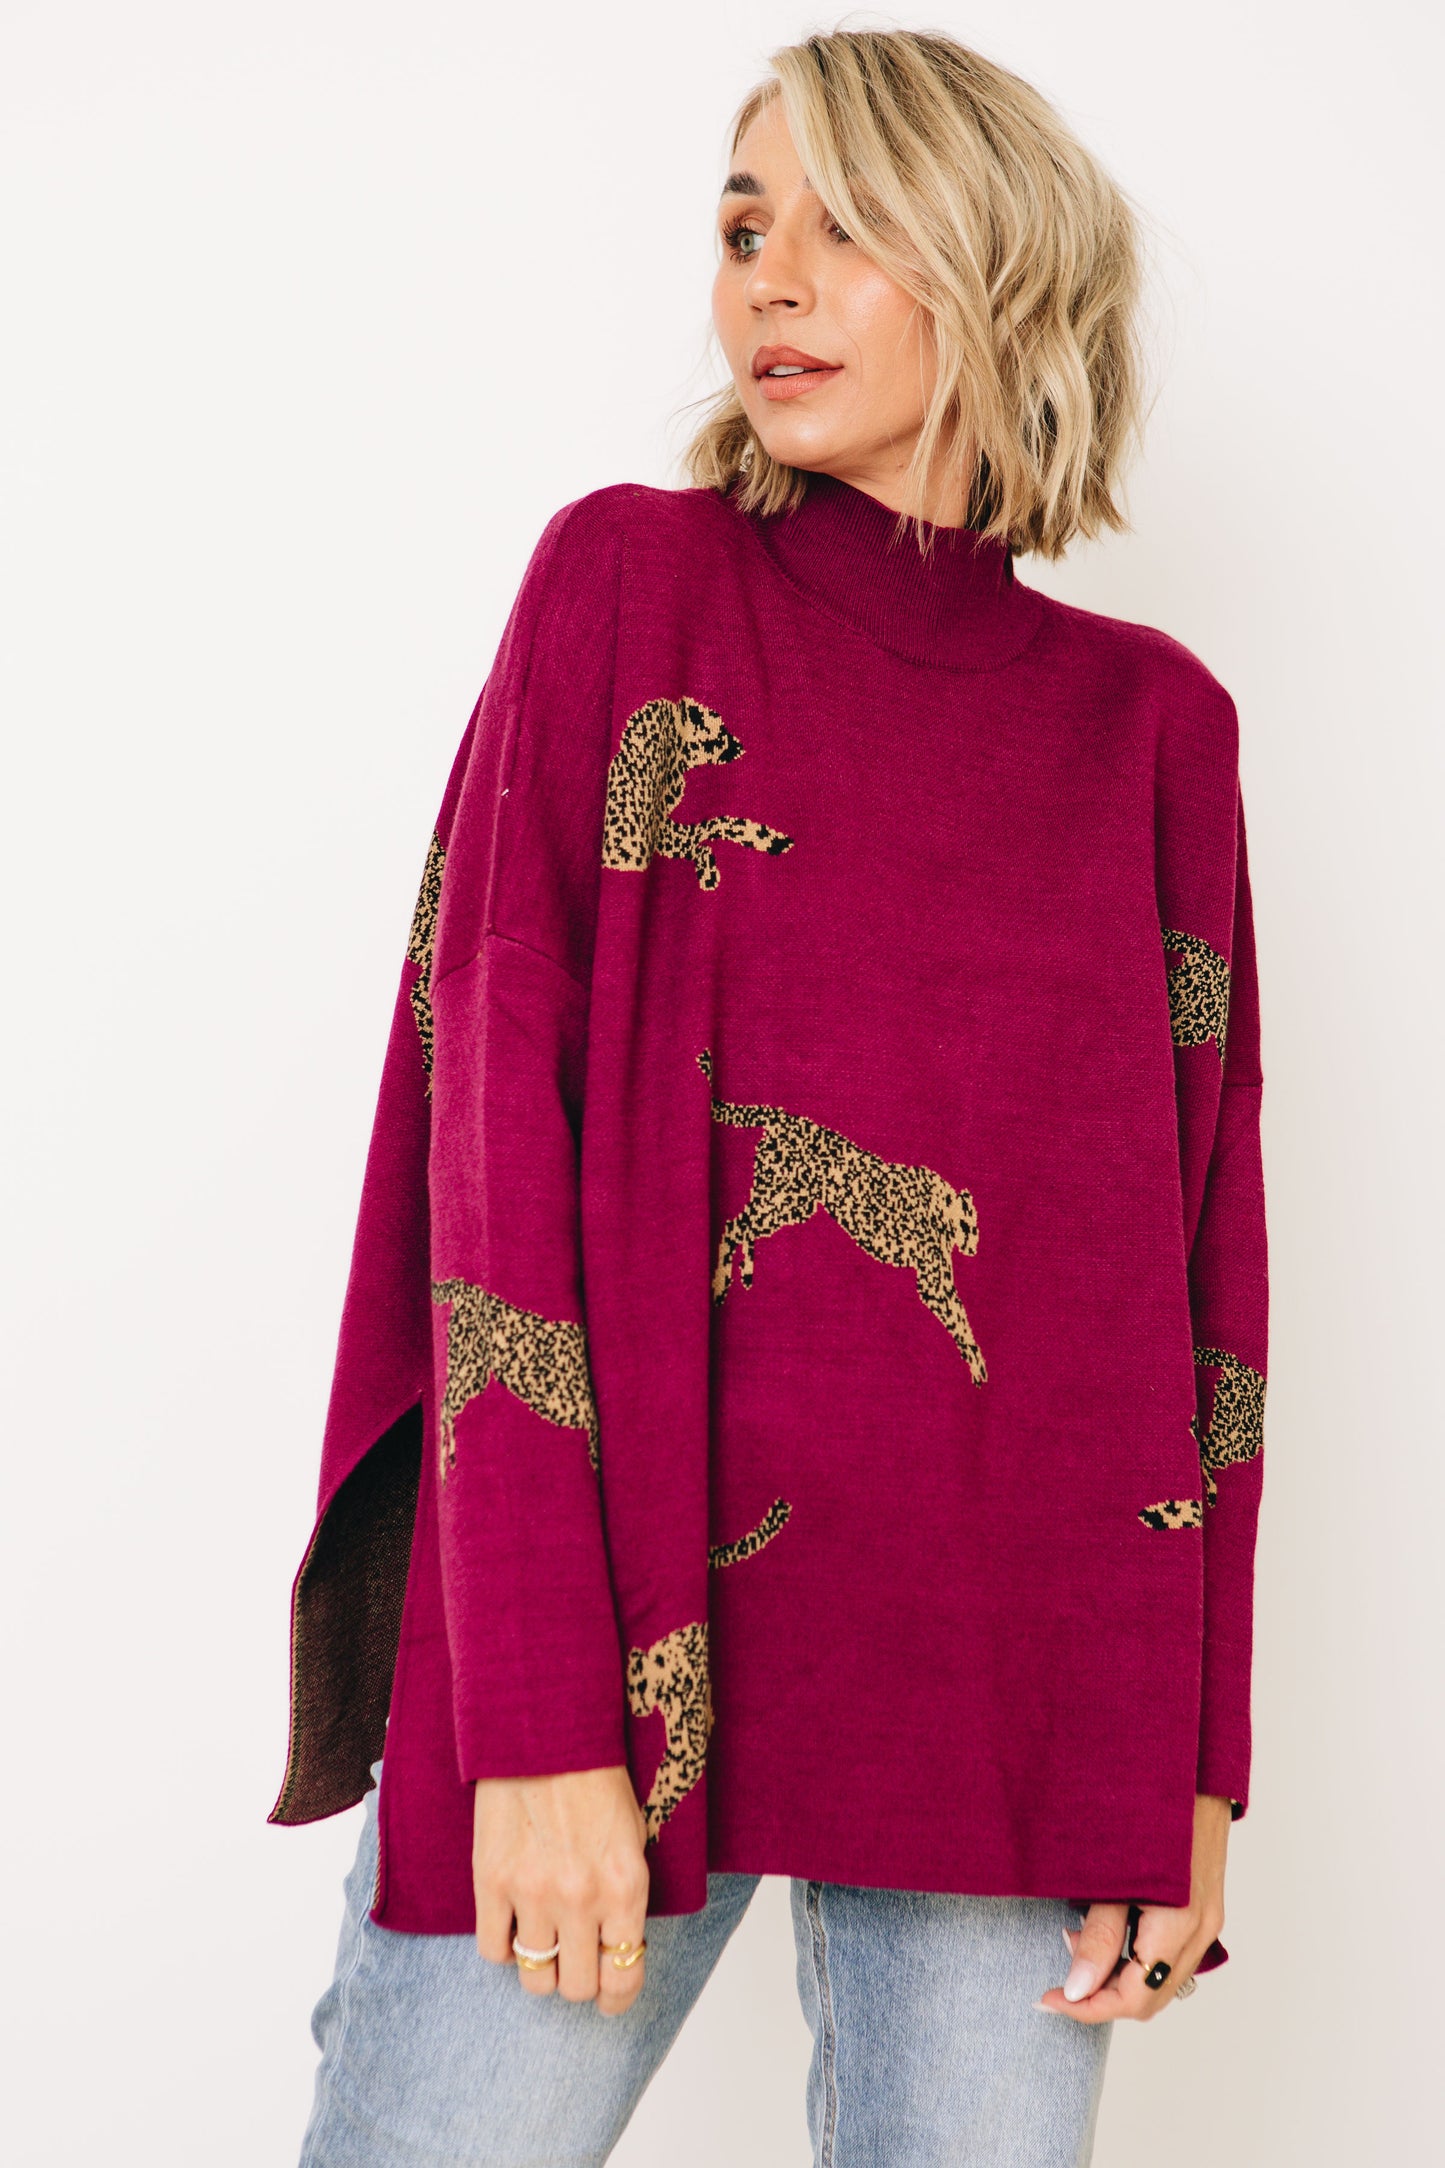 Regal Roar - Cheetah Print Mock Neck Long Sleeve Sweater (S-2XL)